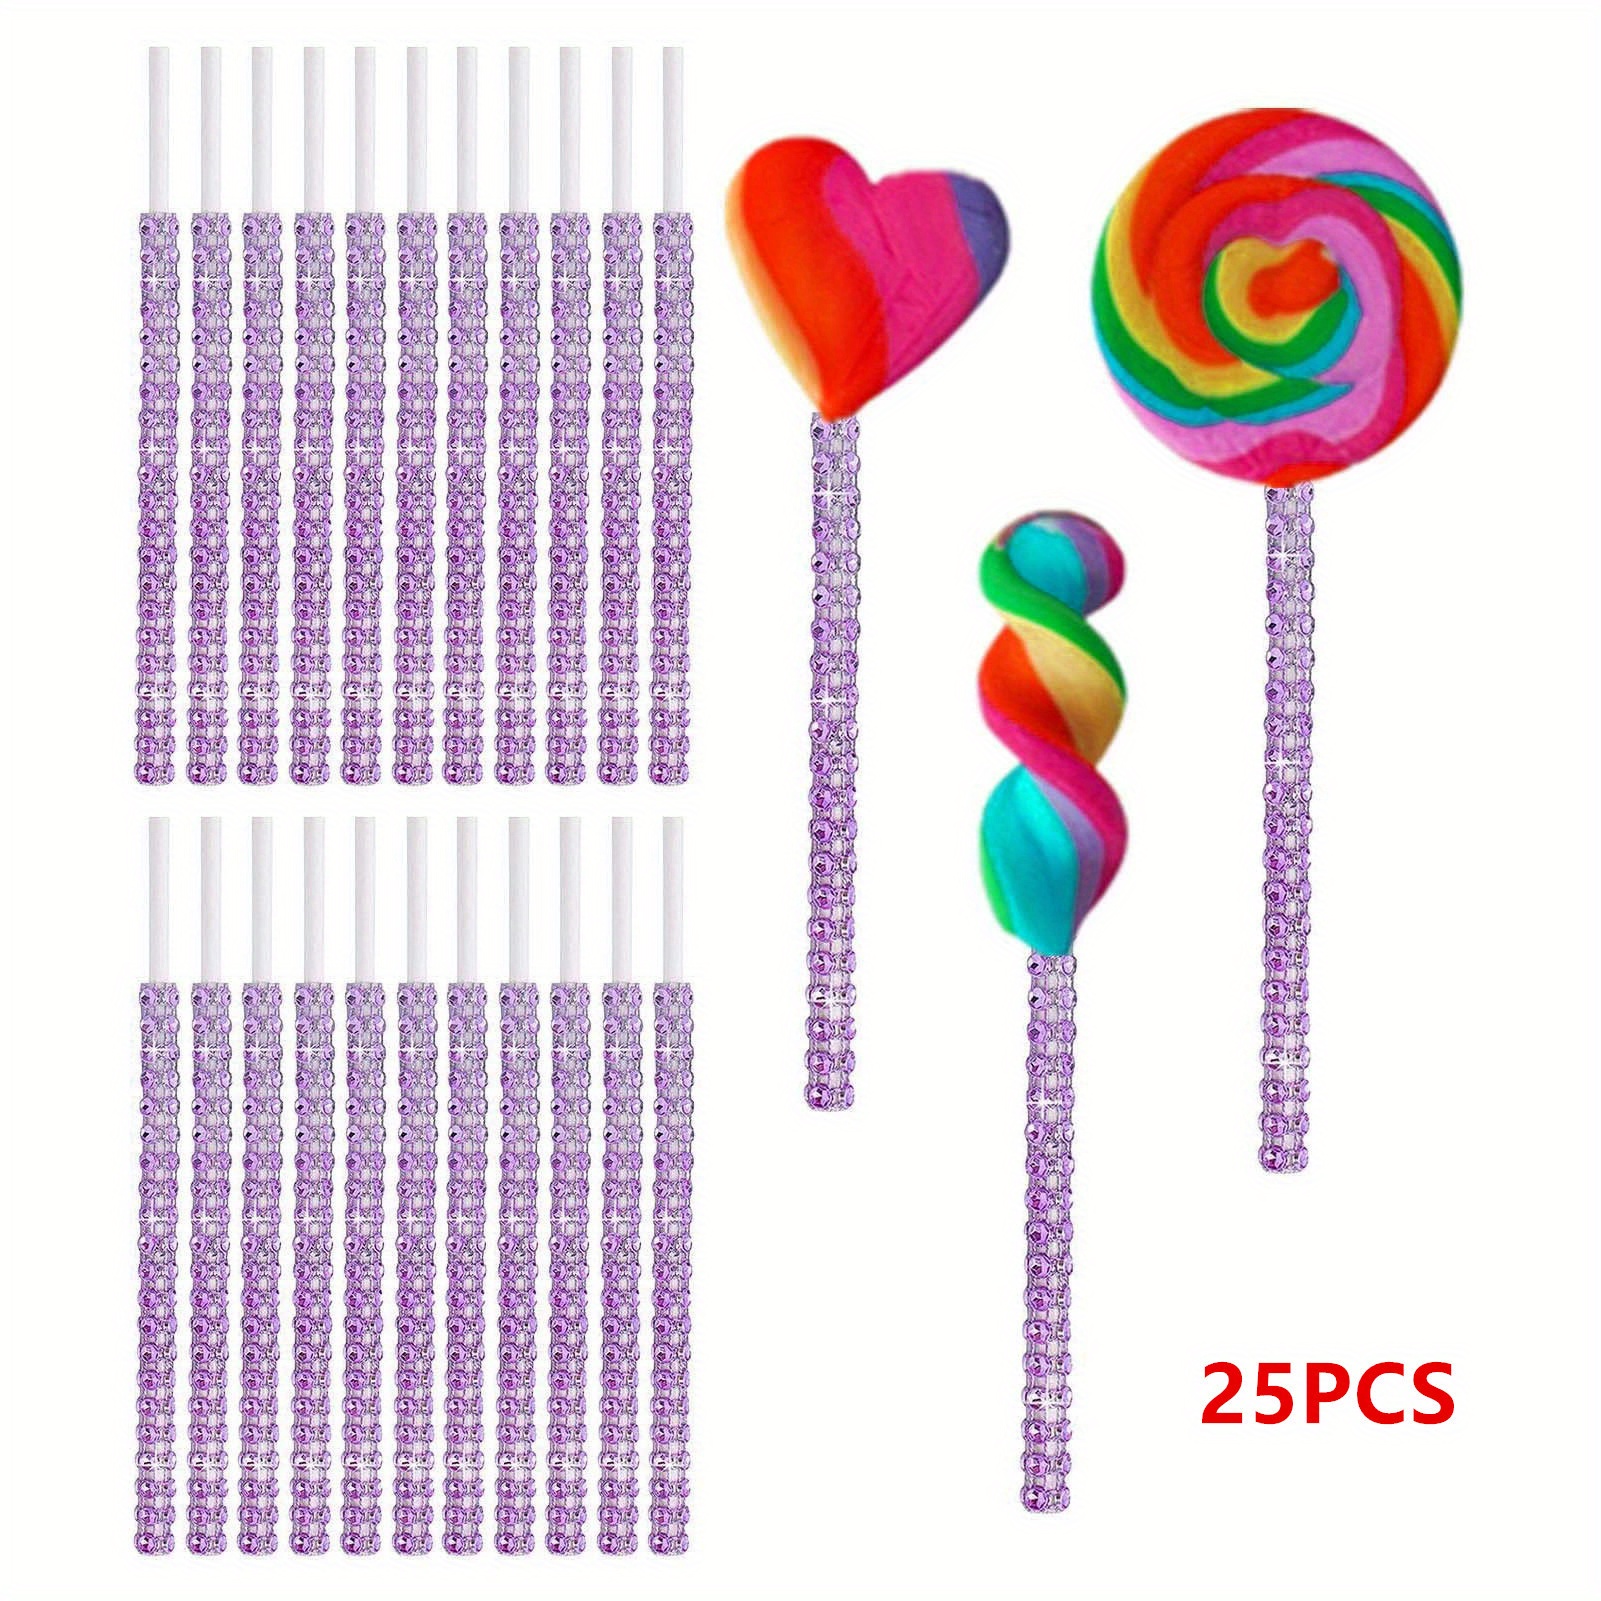 100Pcs Solid plastic Sucker Sticks For Lollipop Cake Candy Cookies Baking